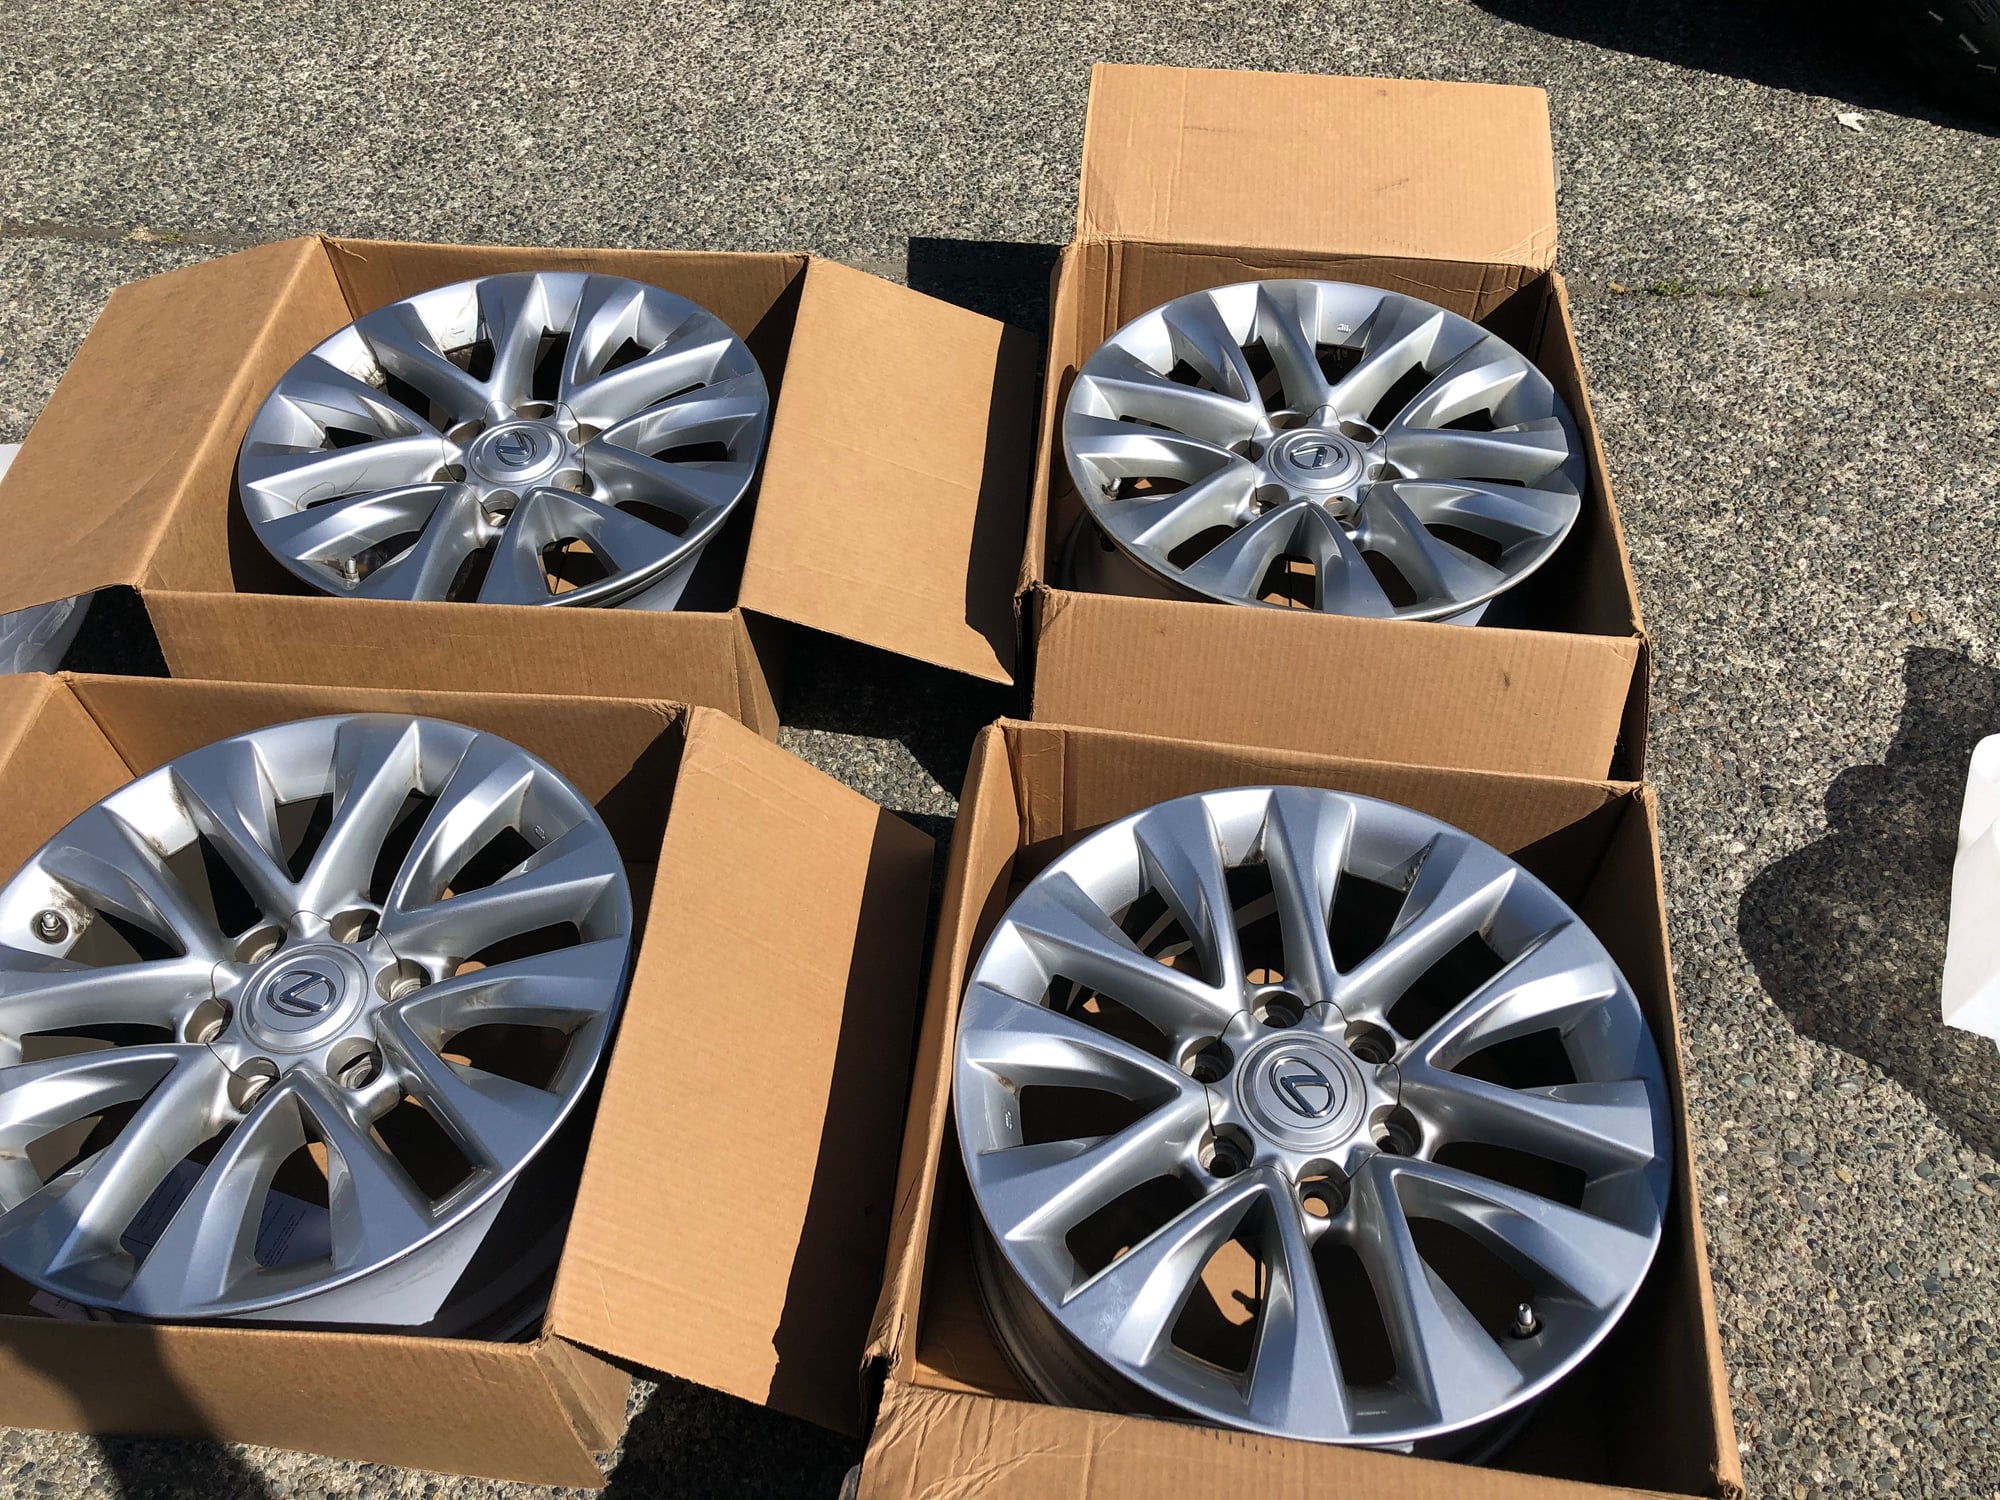 Wheels and Tires/Axles - GX460 OEM Premium 18” Wheels Silver $250 - Used - 2014 to 2021 Lexus GX - Renton, WA 98055, United States